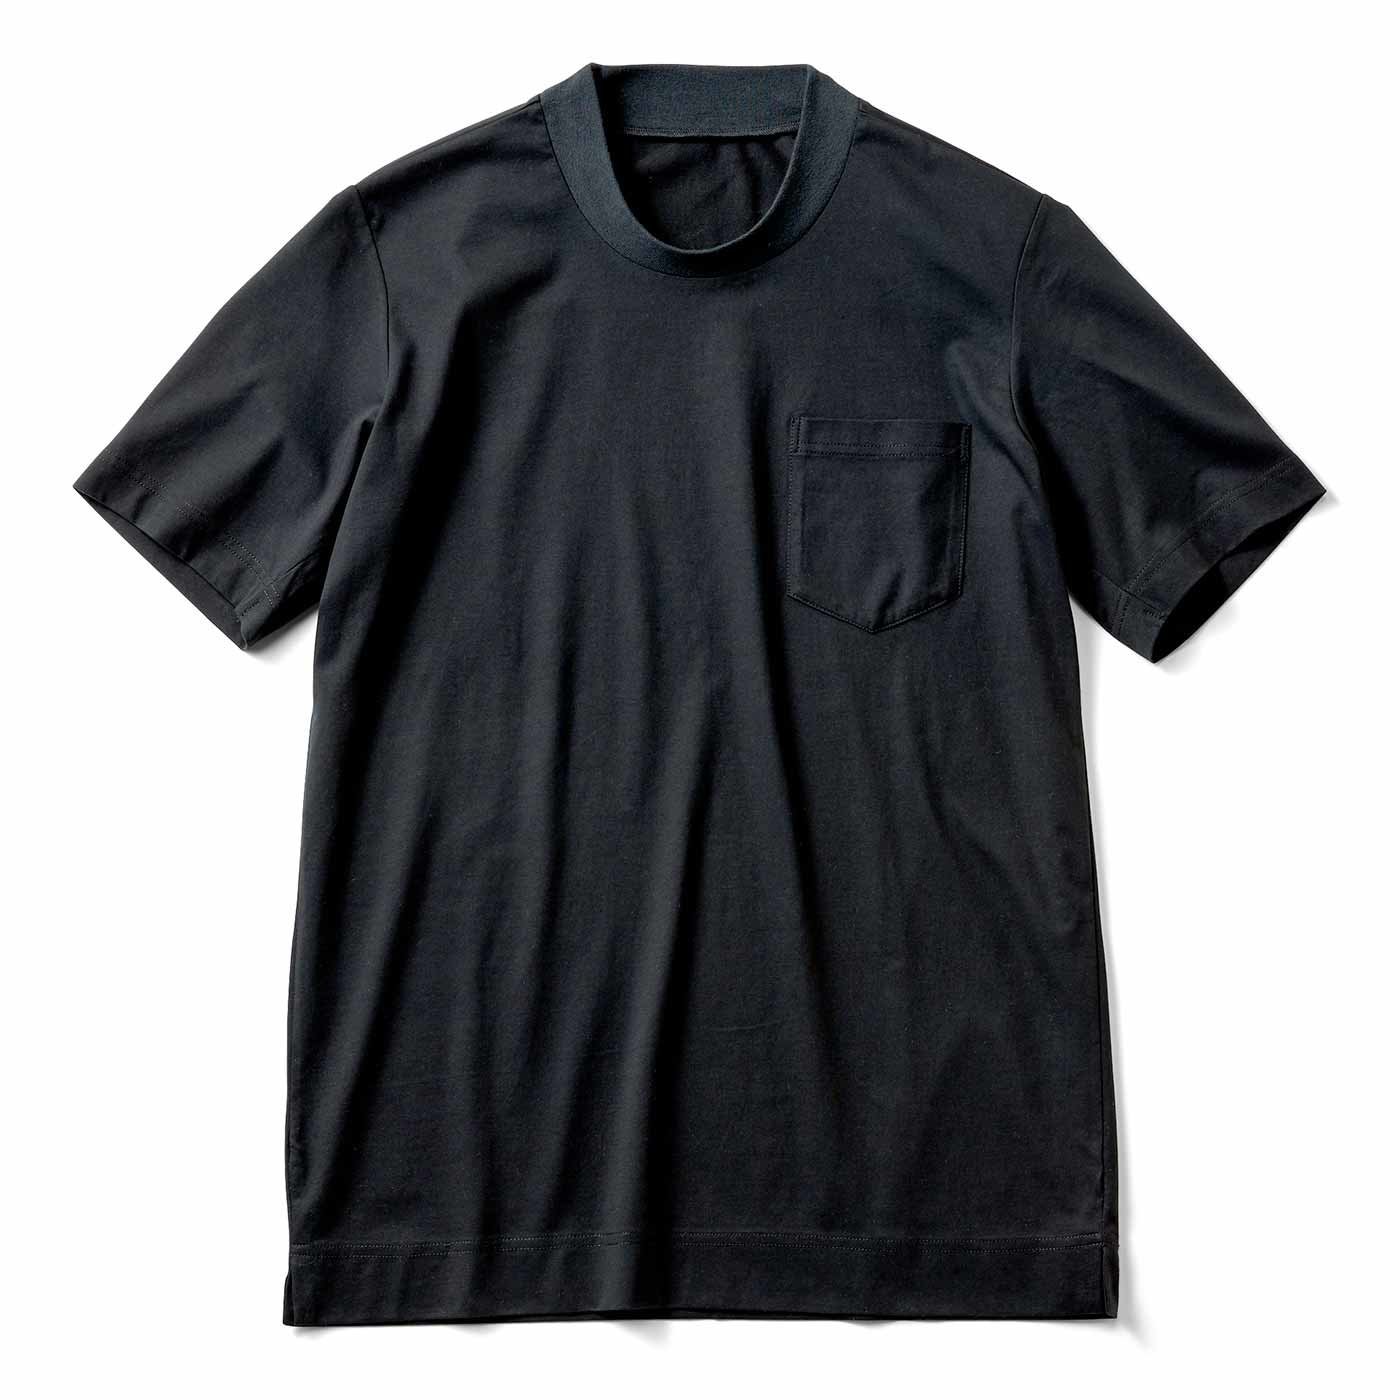 IEDIT[イディット] ジャケットインのためのシャツの代わりに着てほしい 美ノビ素材のメンズクルーネックプルオーバートップス〈ブラック〉